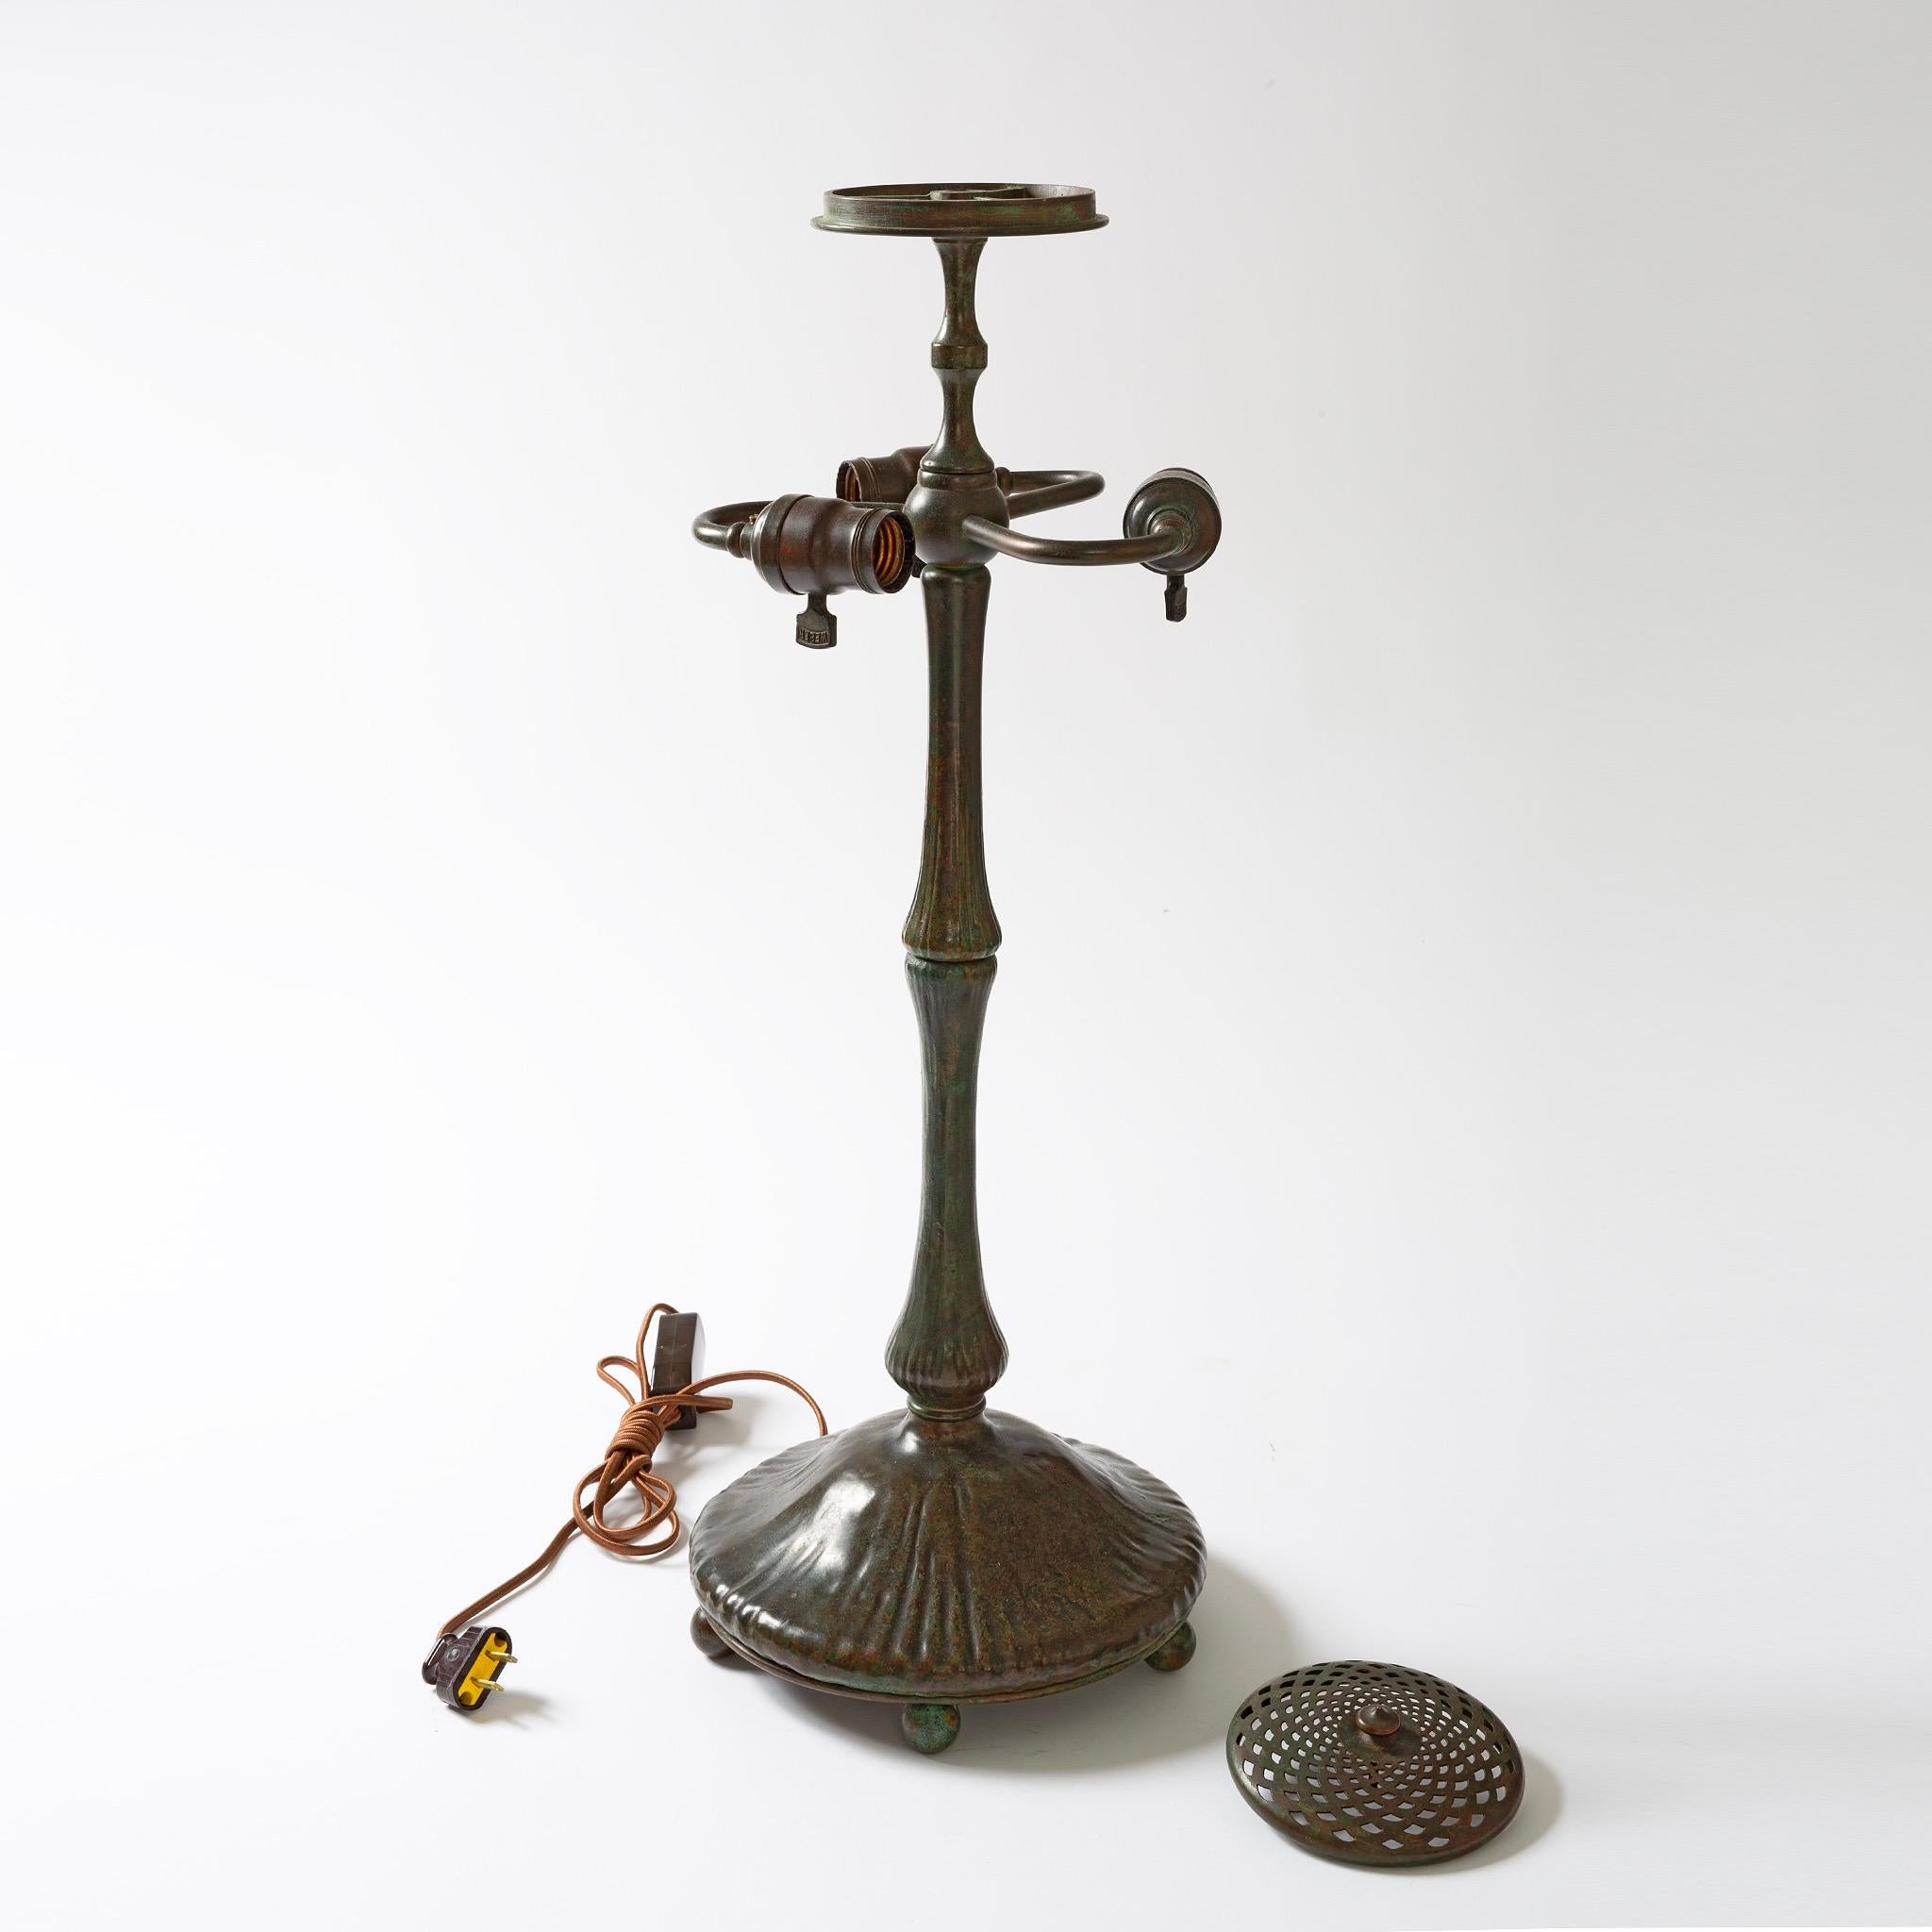 20th Century Tiffany Studios New York “Dragonfly” Table Lamp